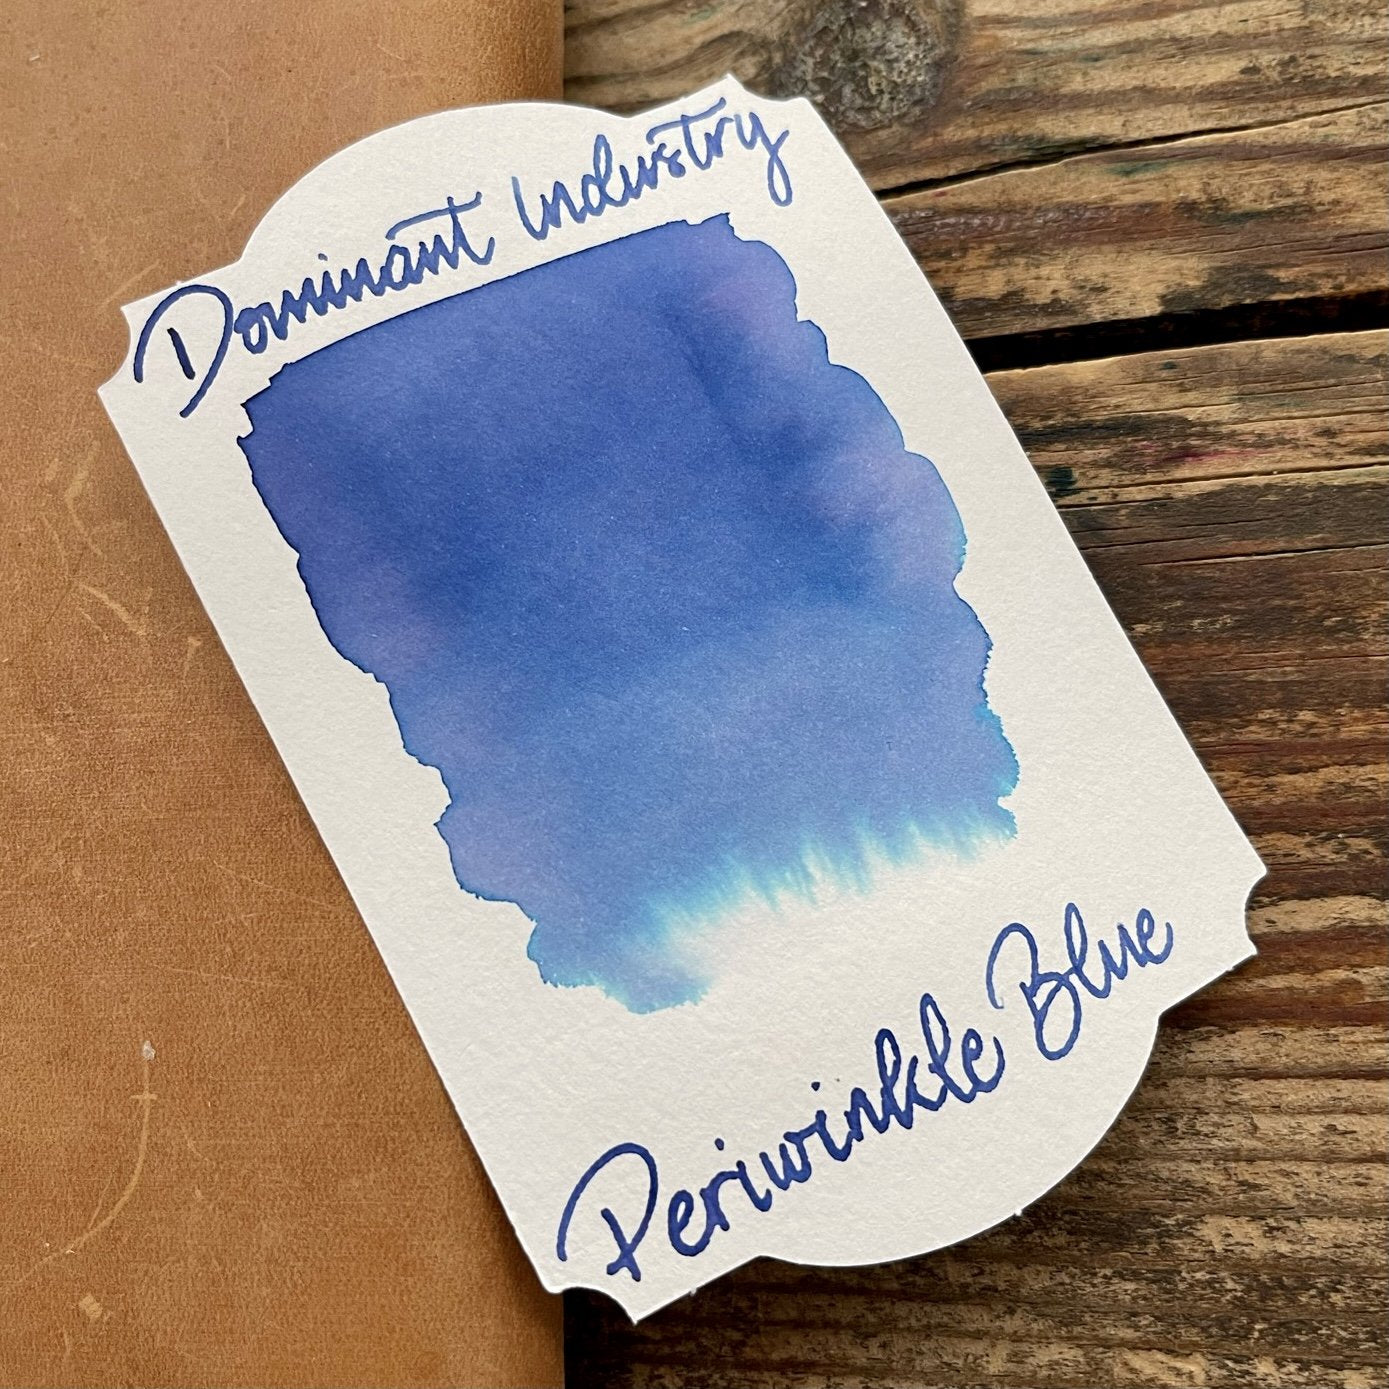 Dominant Industry Periwinkle Blue Ink